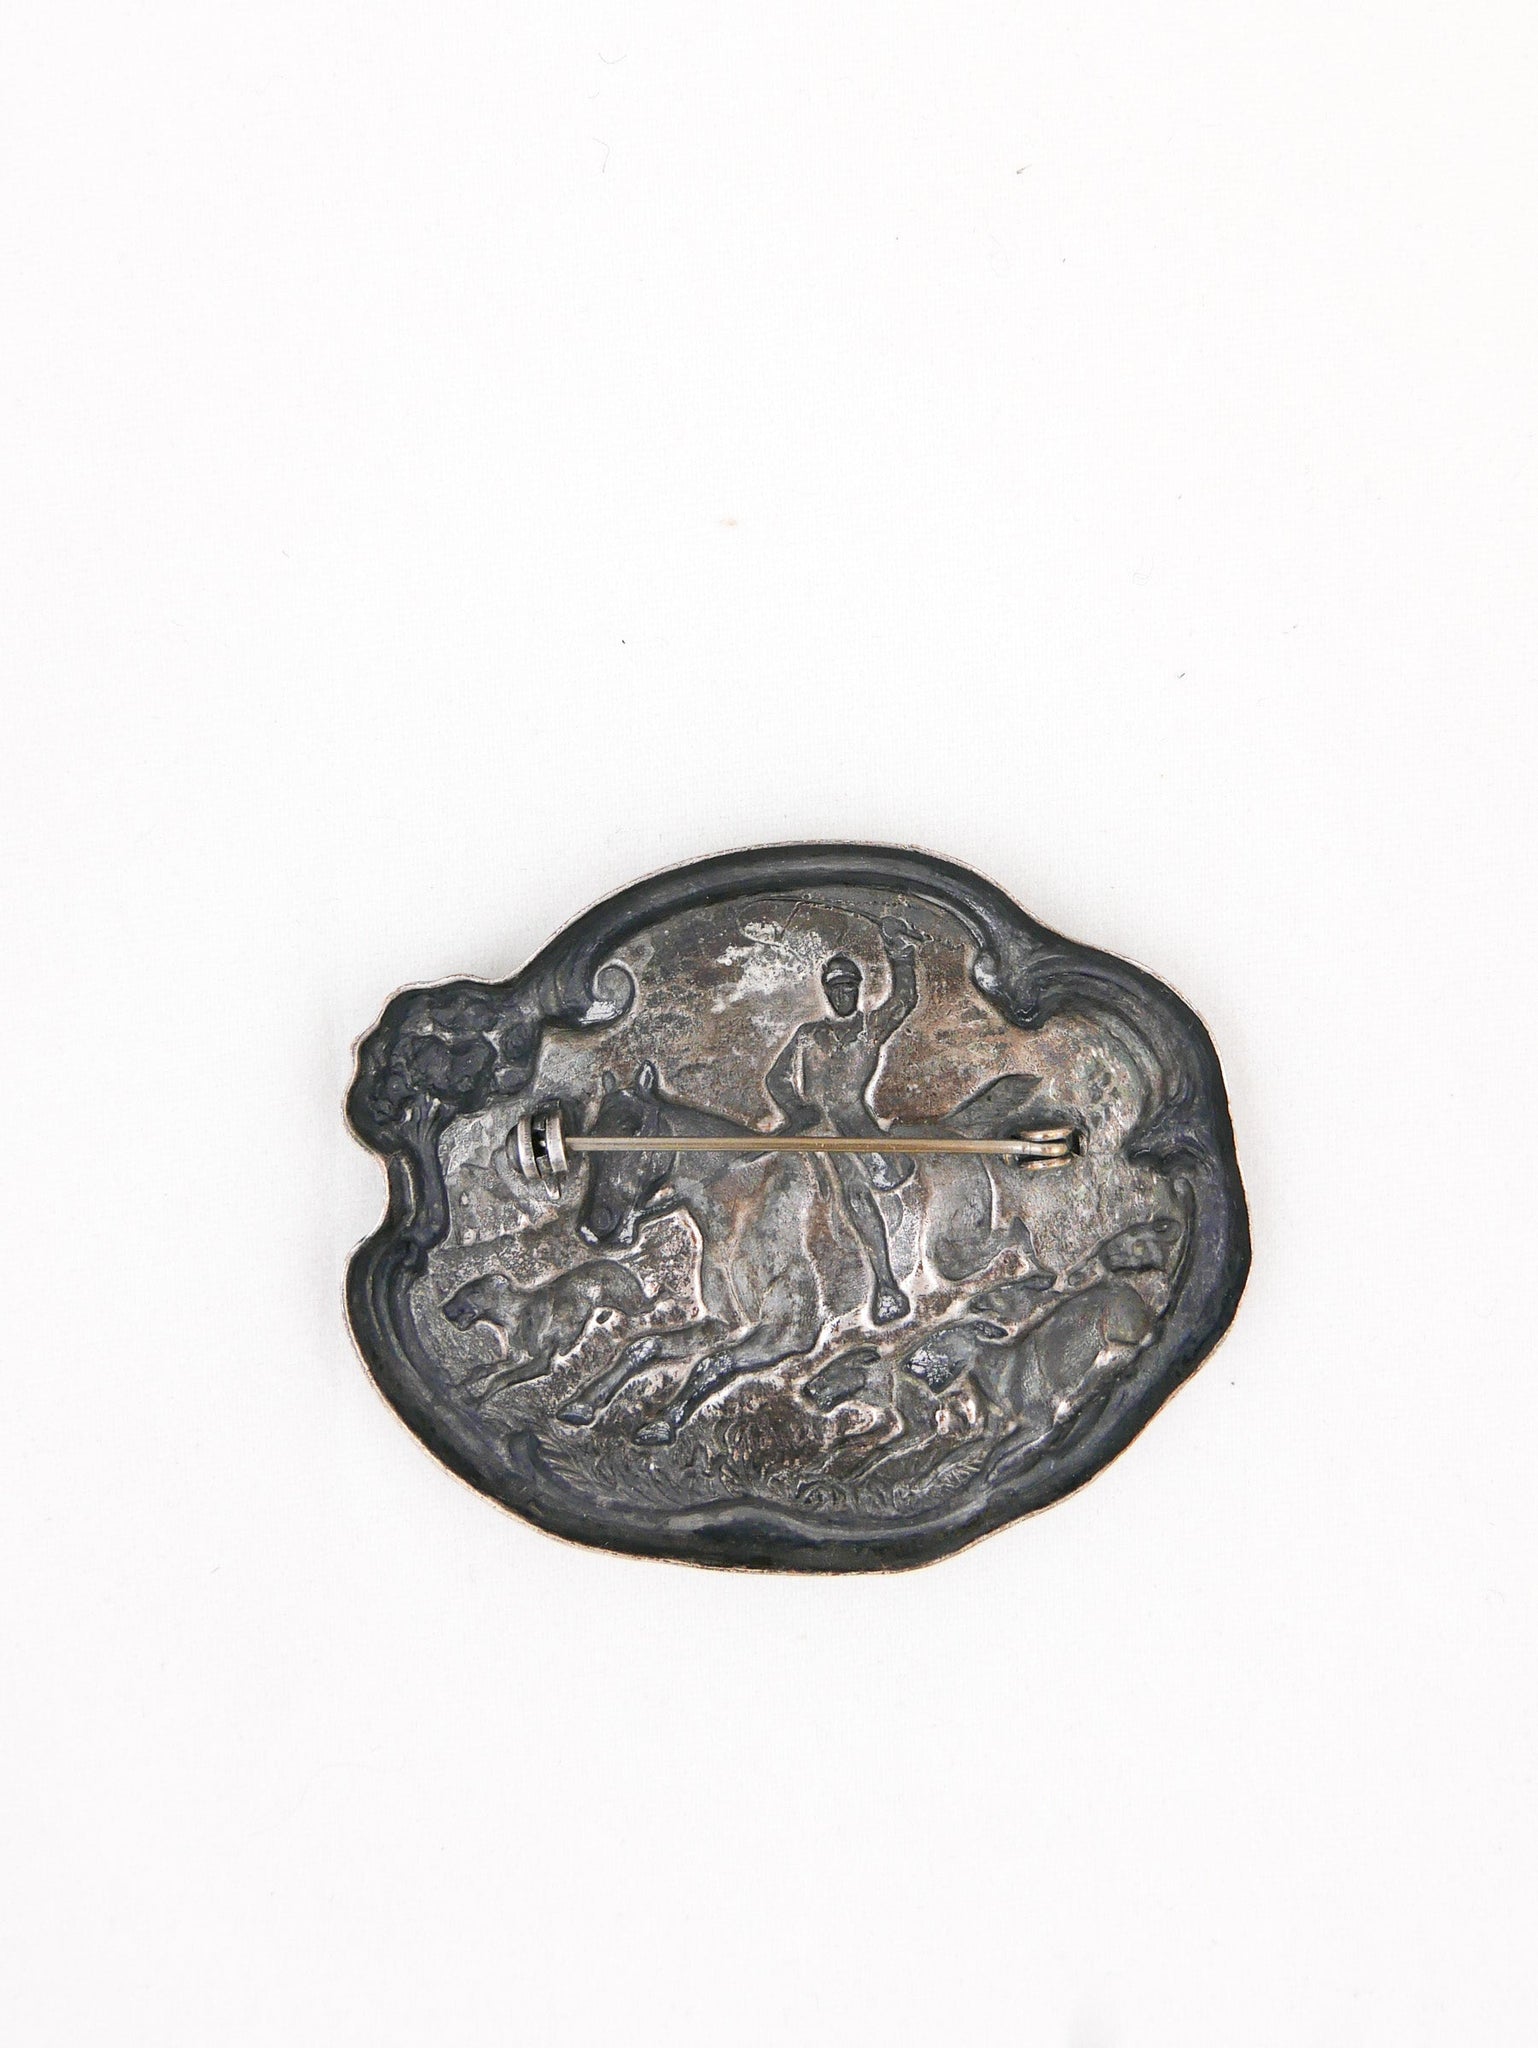 Antique English Hunting Pin